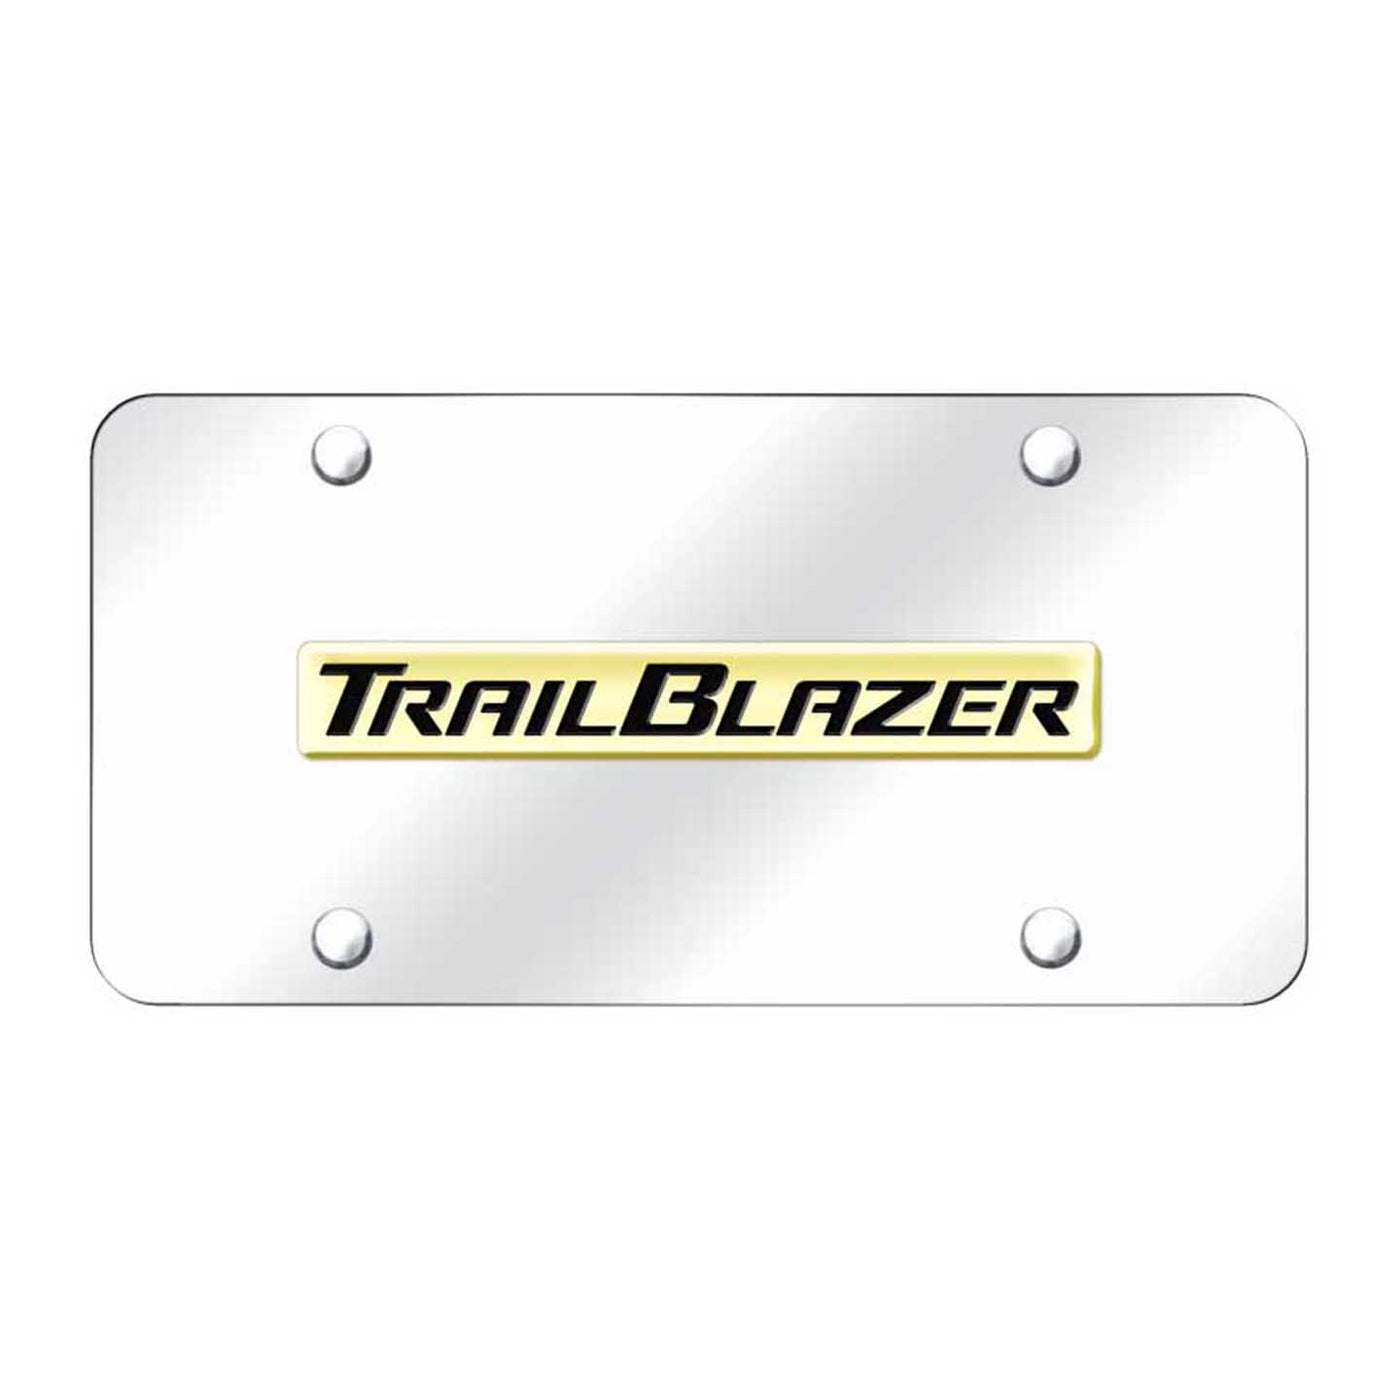 Trailblazer Name License Plate - Gold on Mirrored